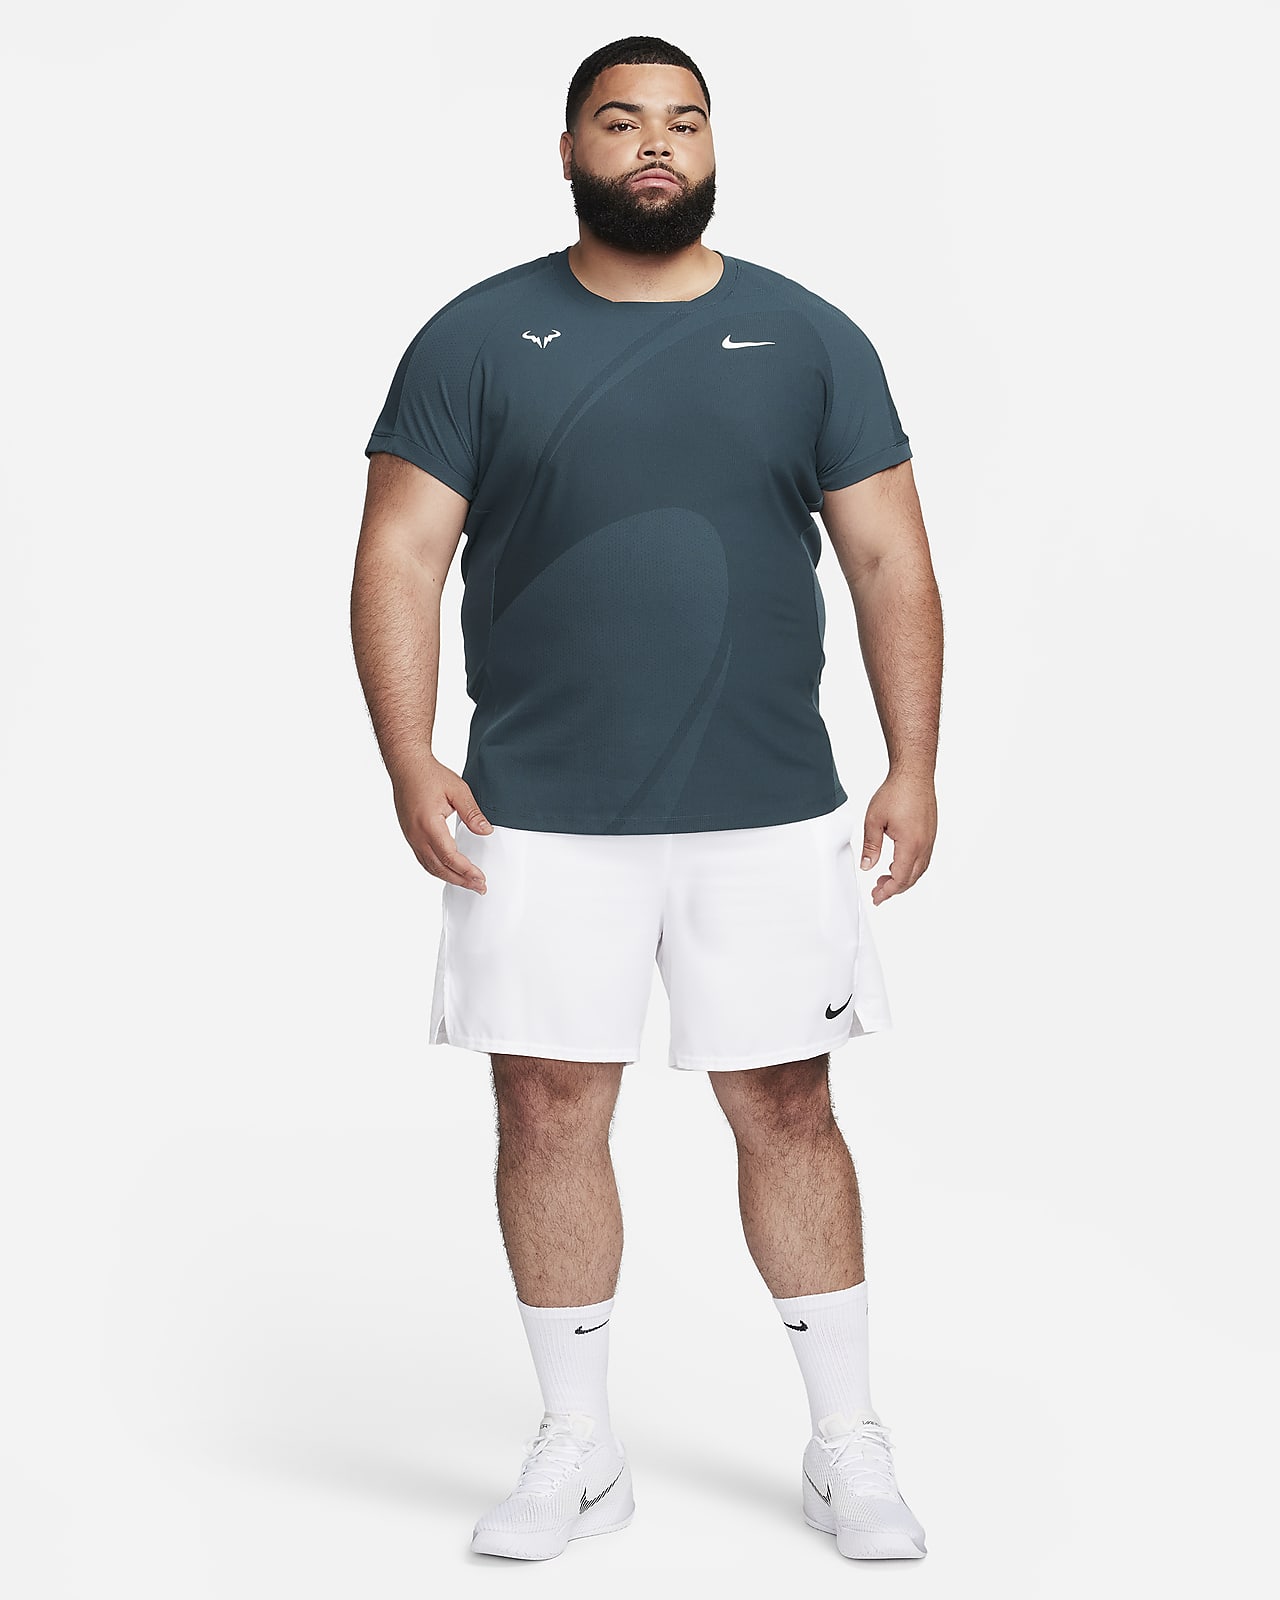 familie interieur Kroniek Rafa Men's Nike Dri-FIT ADV Short-Sleeve Tennis Top. Nike.com